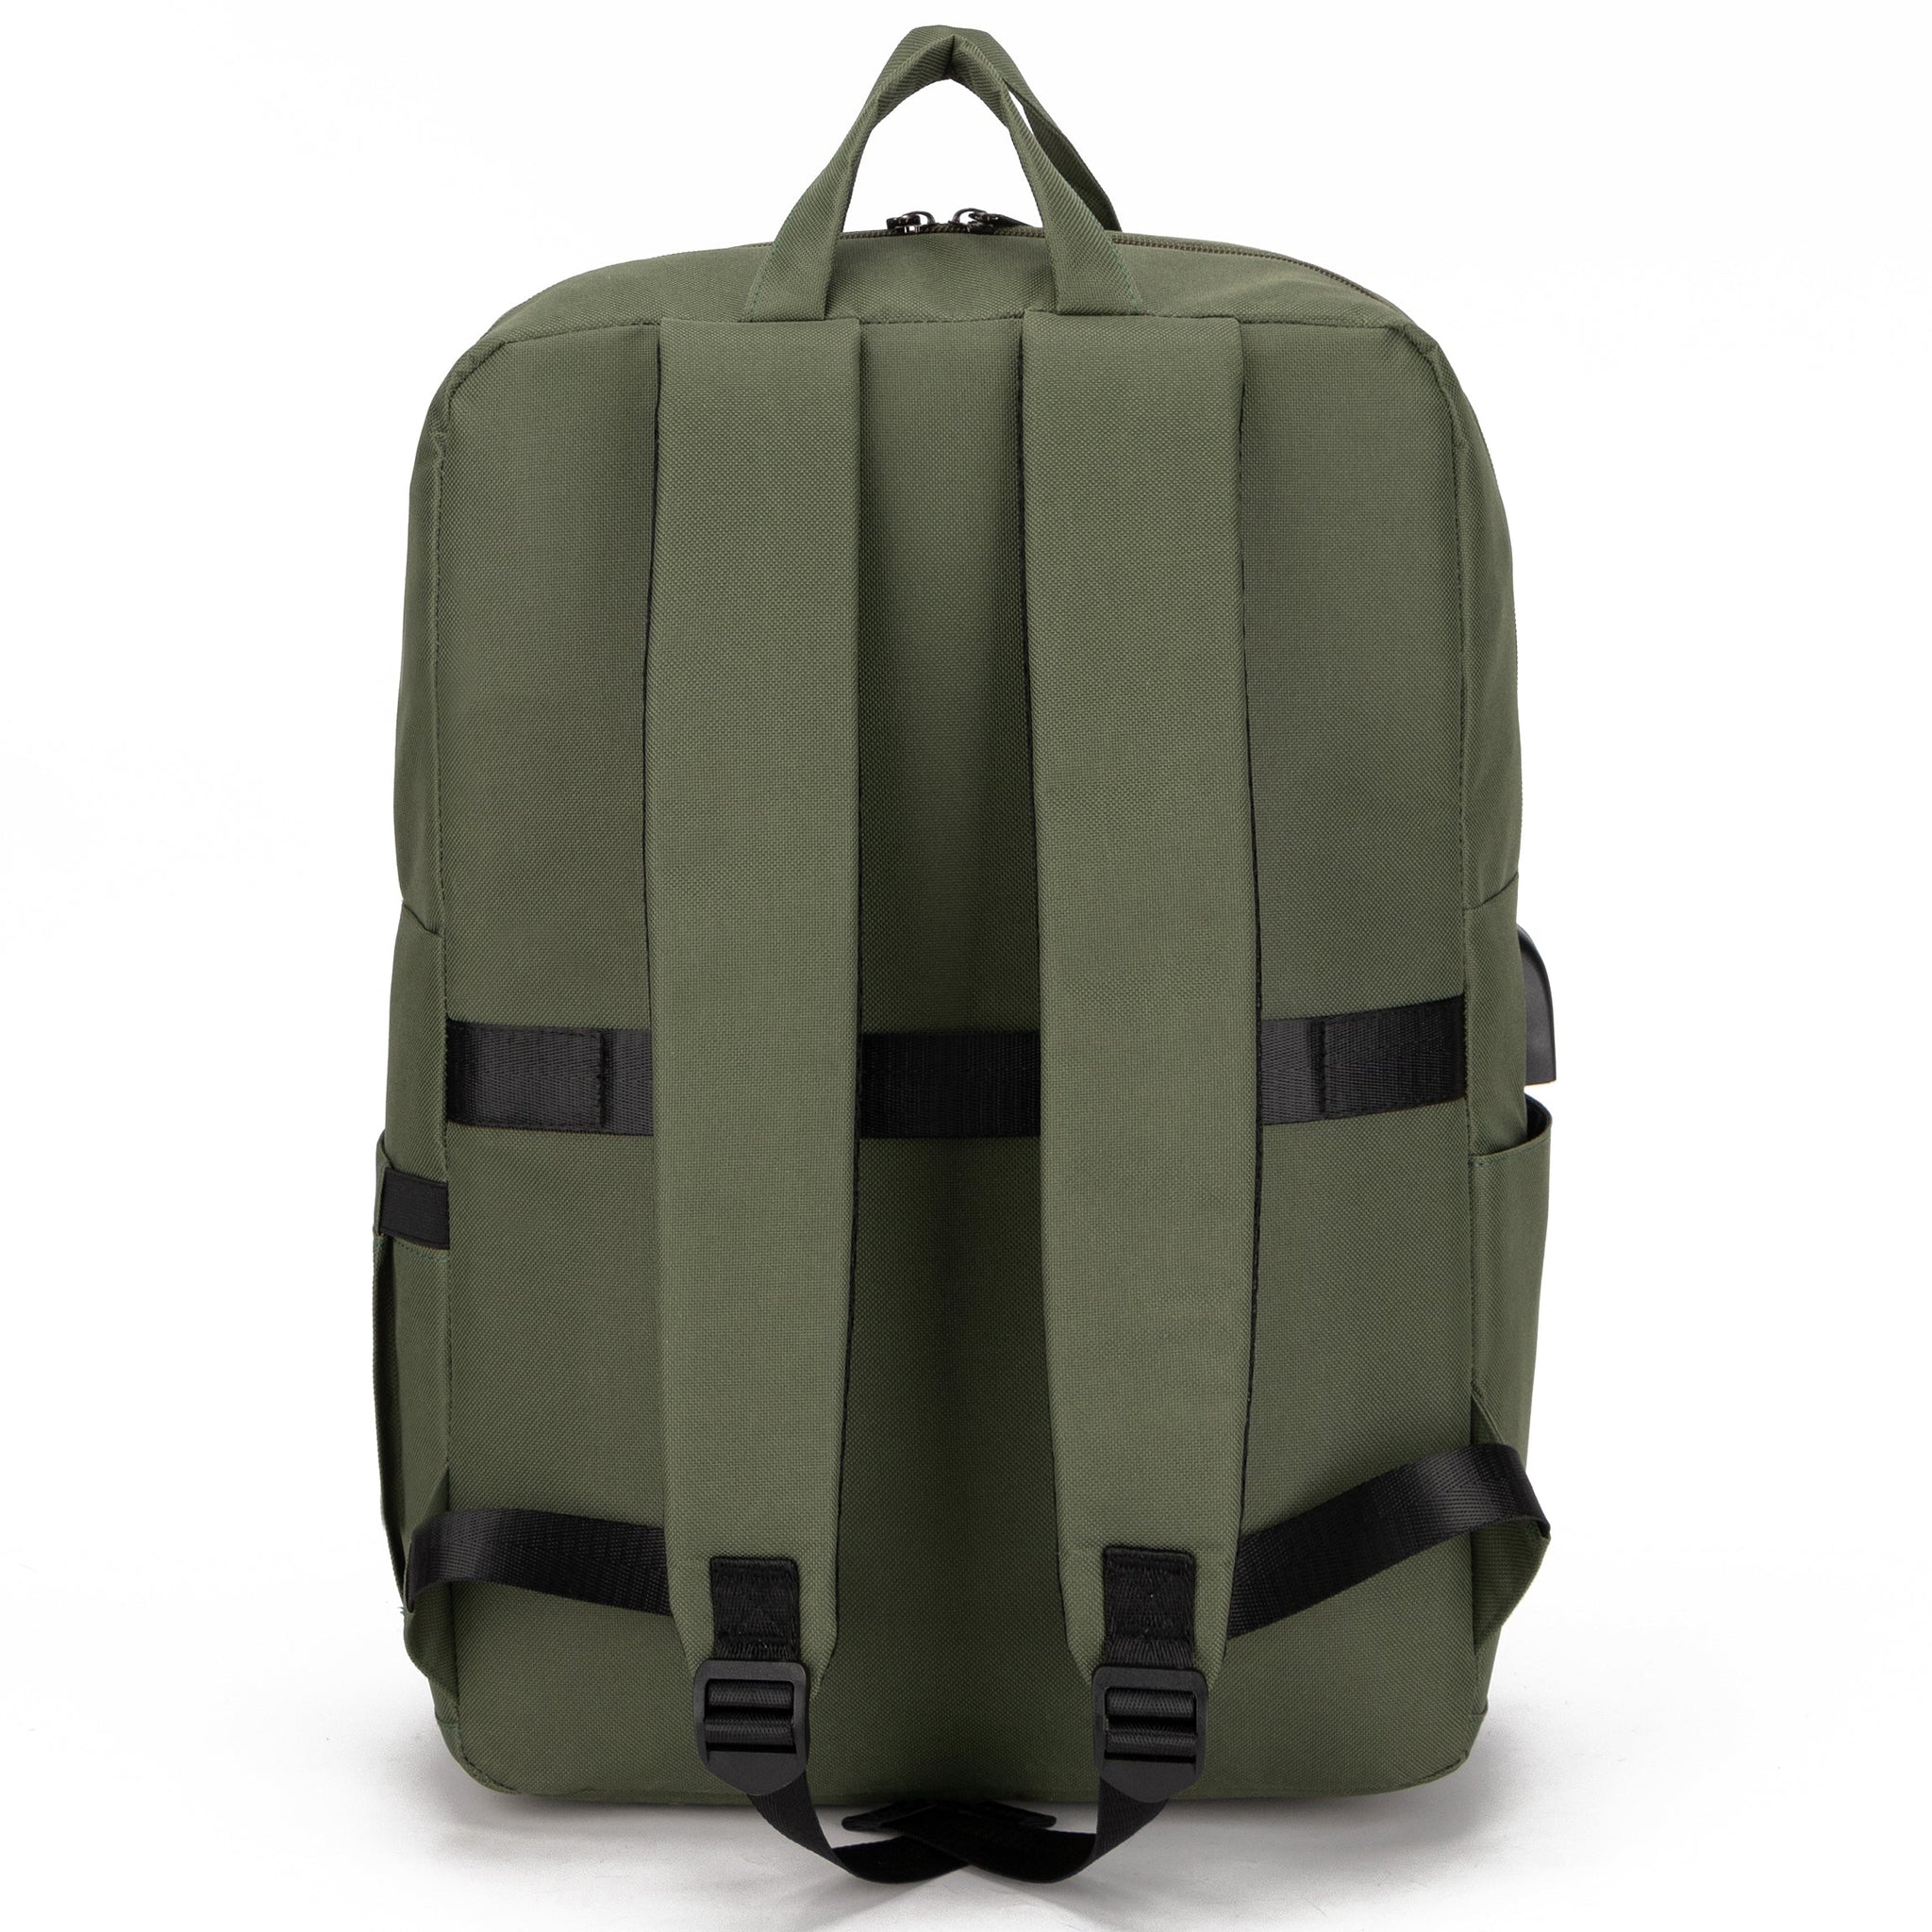 IZOD Wisdom Slim 17" Laptop Backpack with USB Charging Port